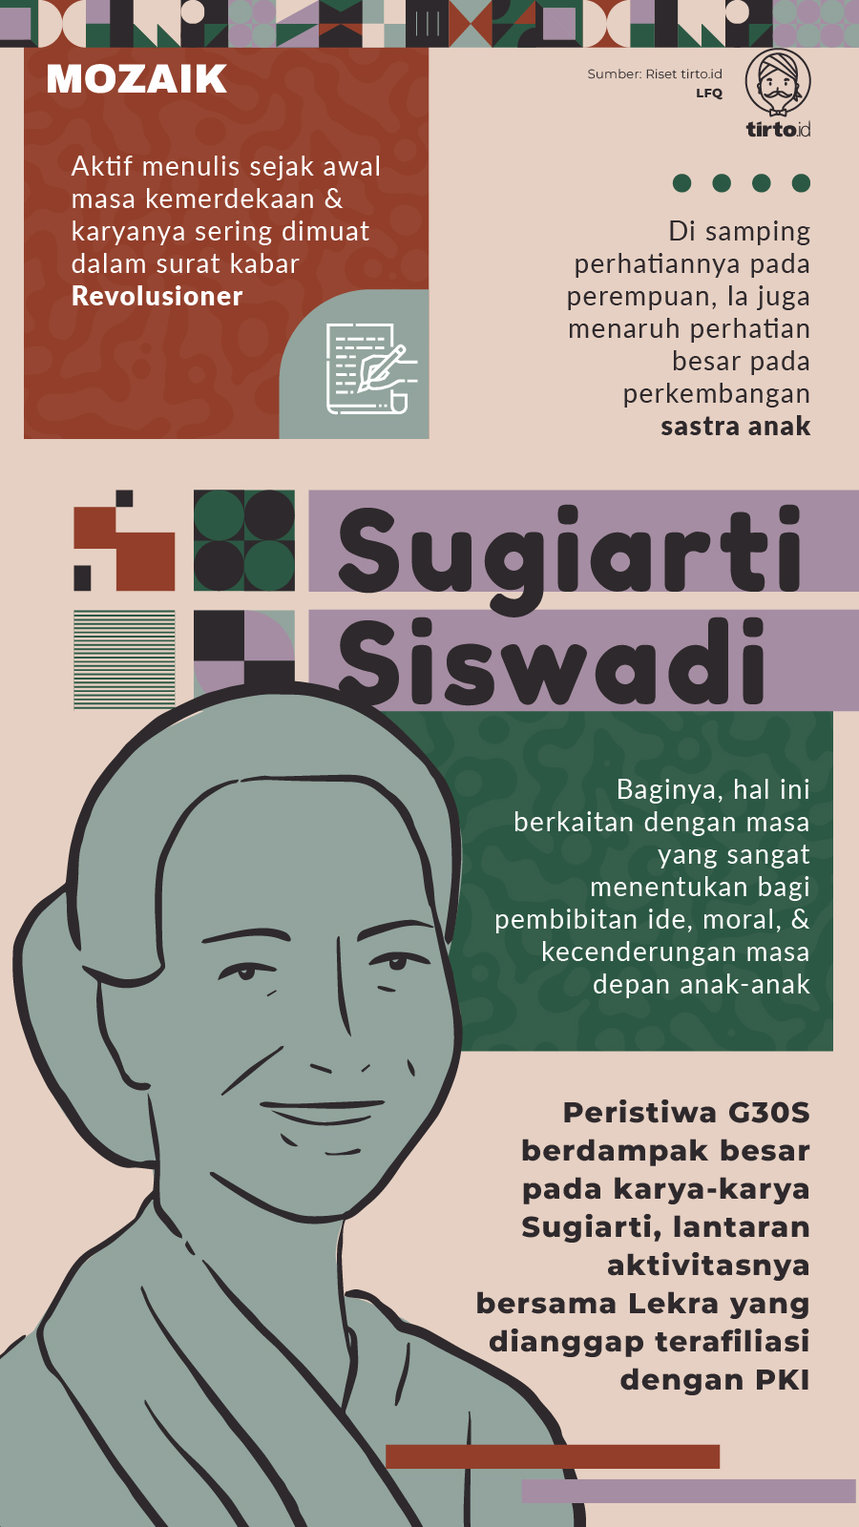 Infografik Mozaik Sugiarti Siswadi